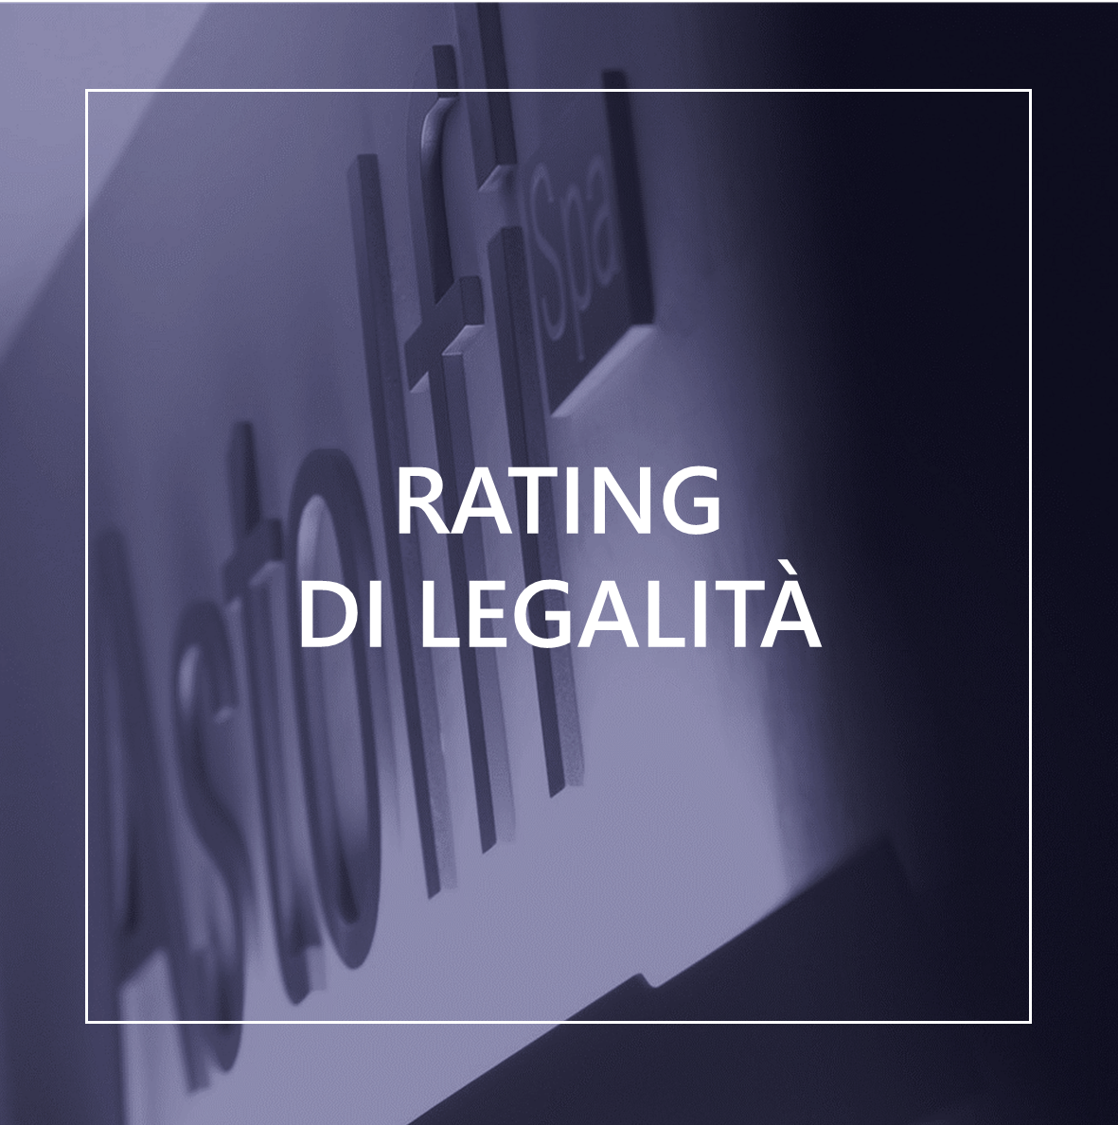 Rating di legalità